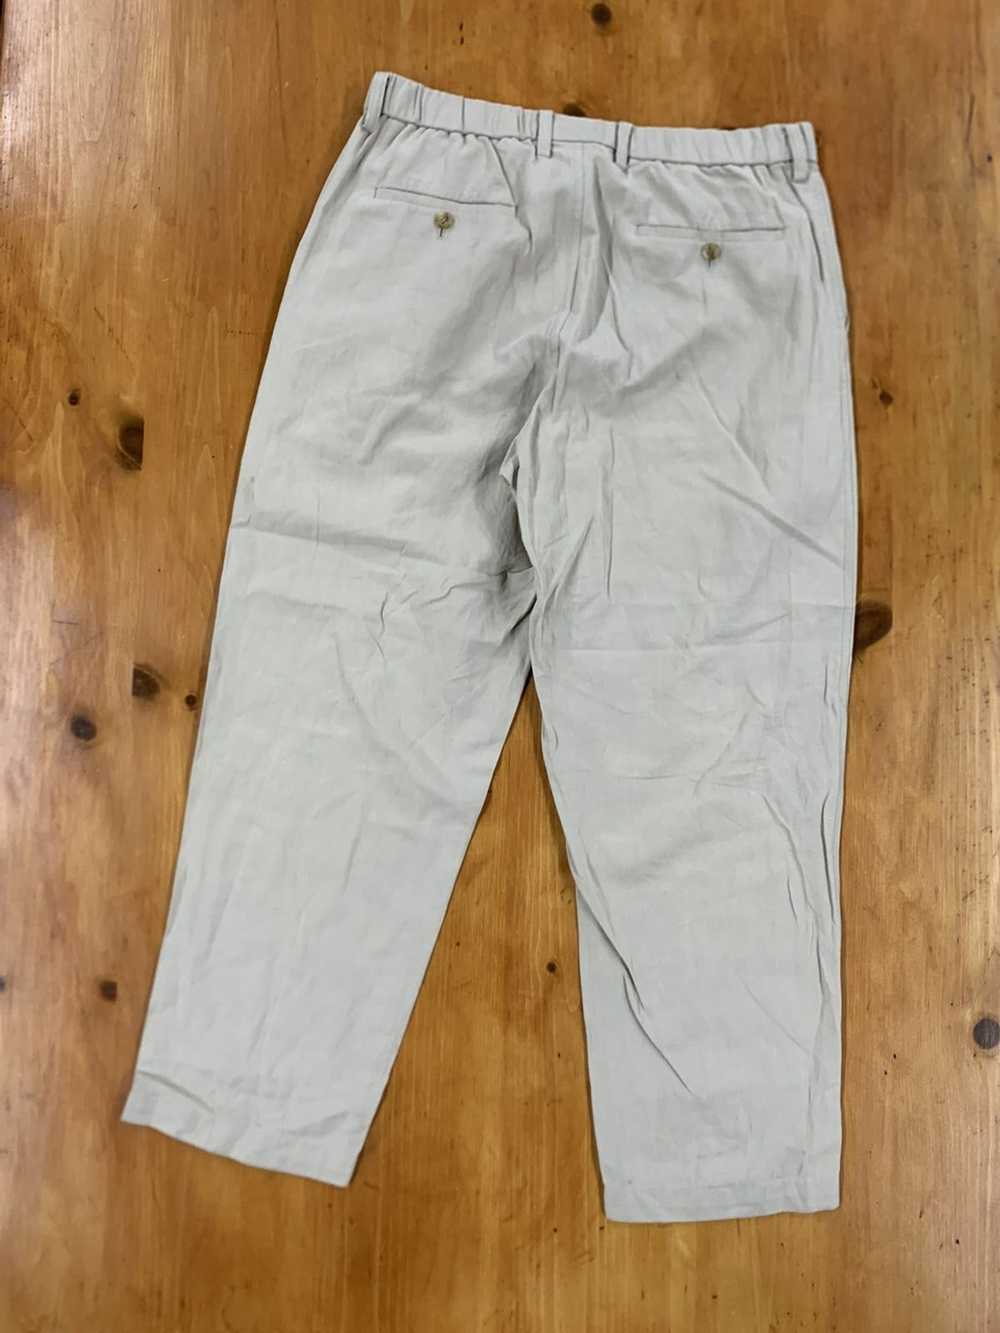 Japanese Brand Issye Miyake Khaki Pants - image 4